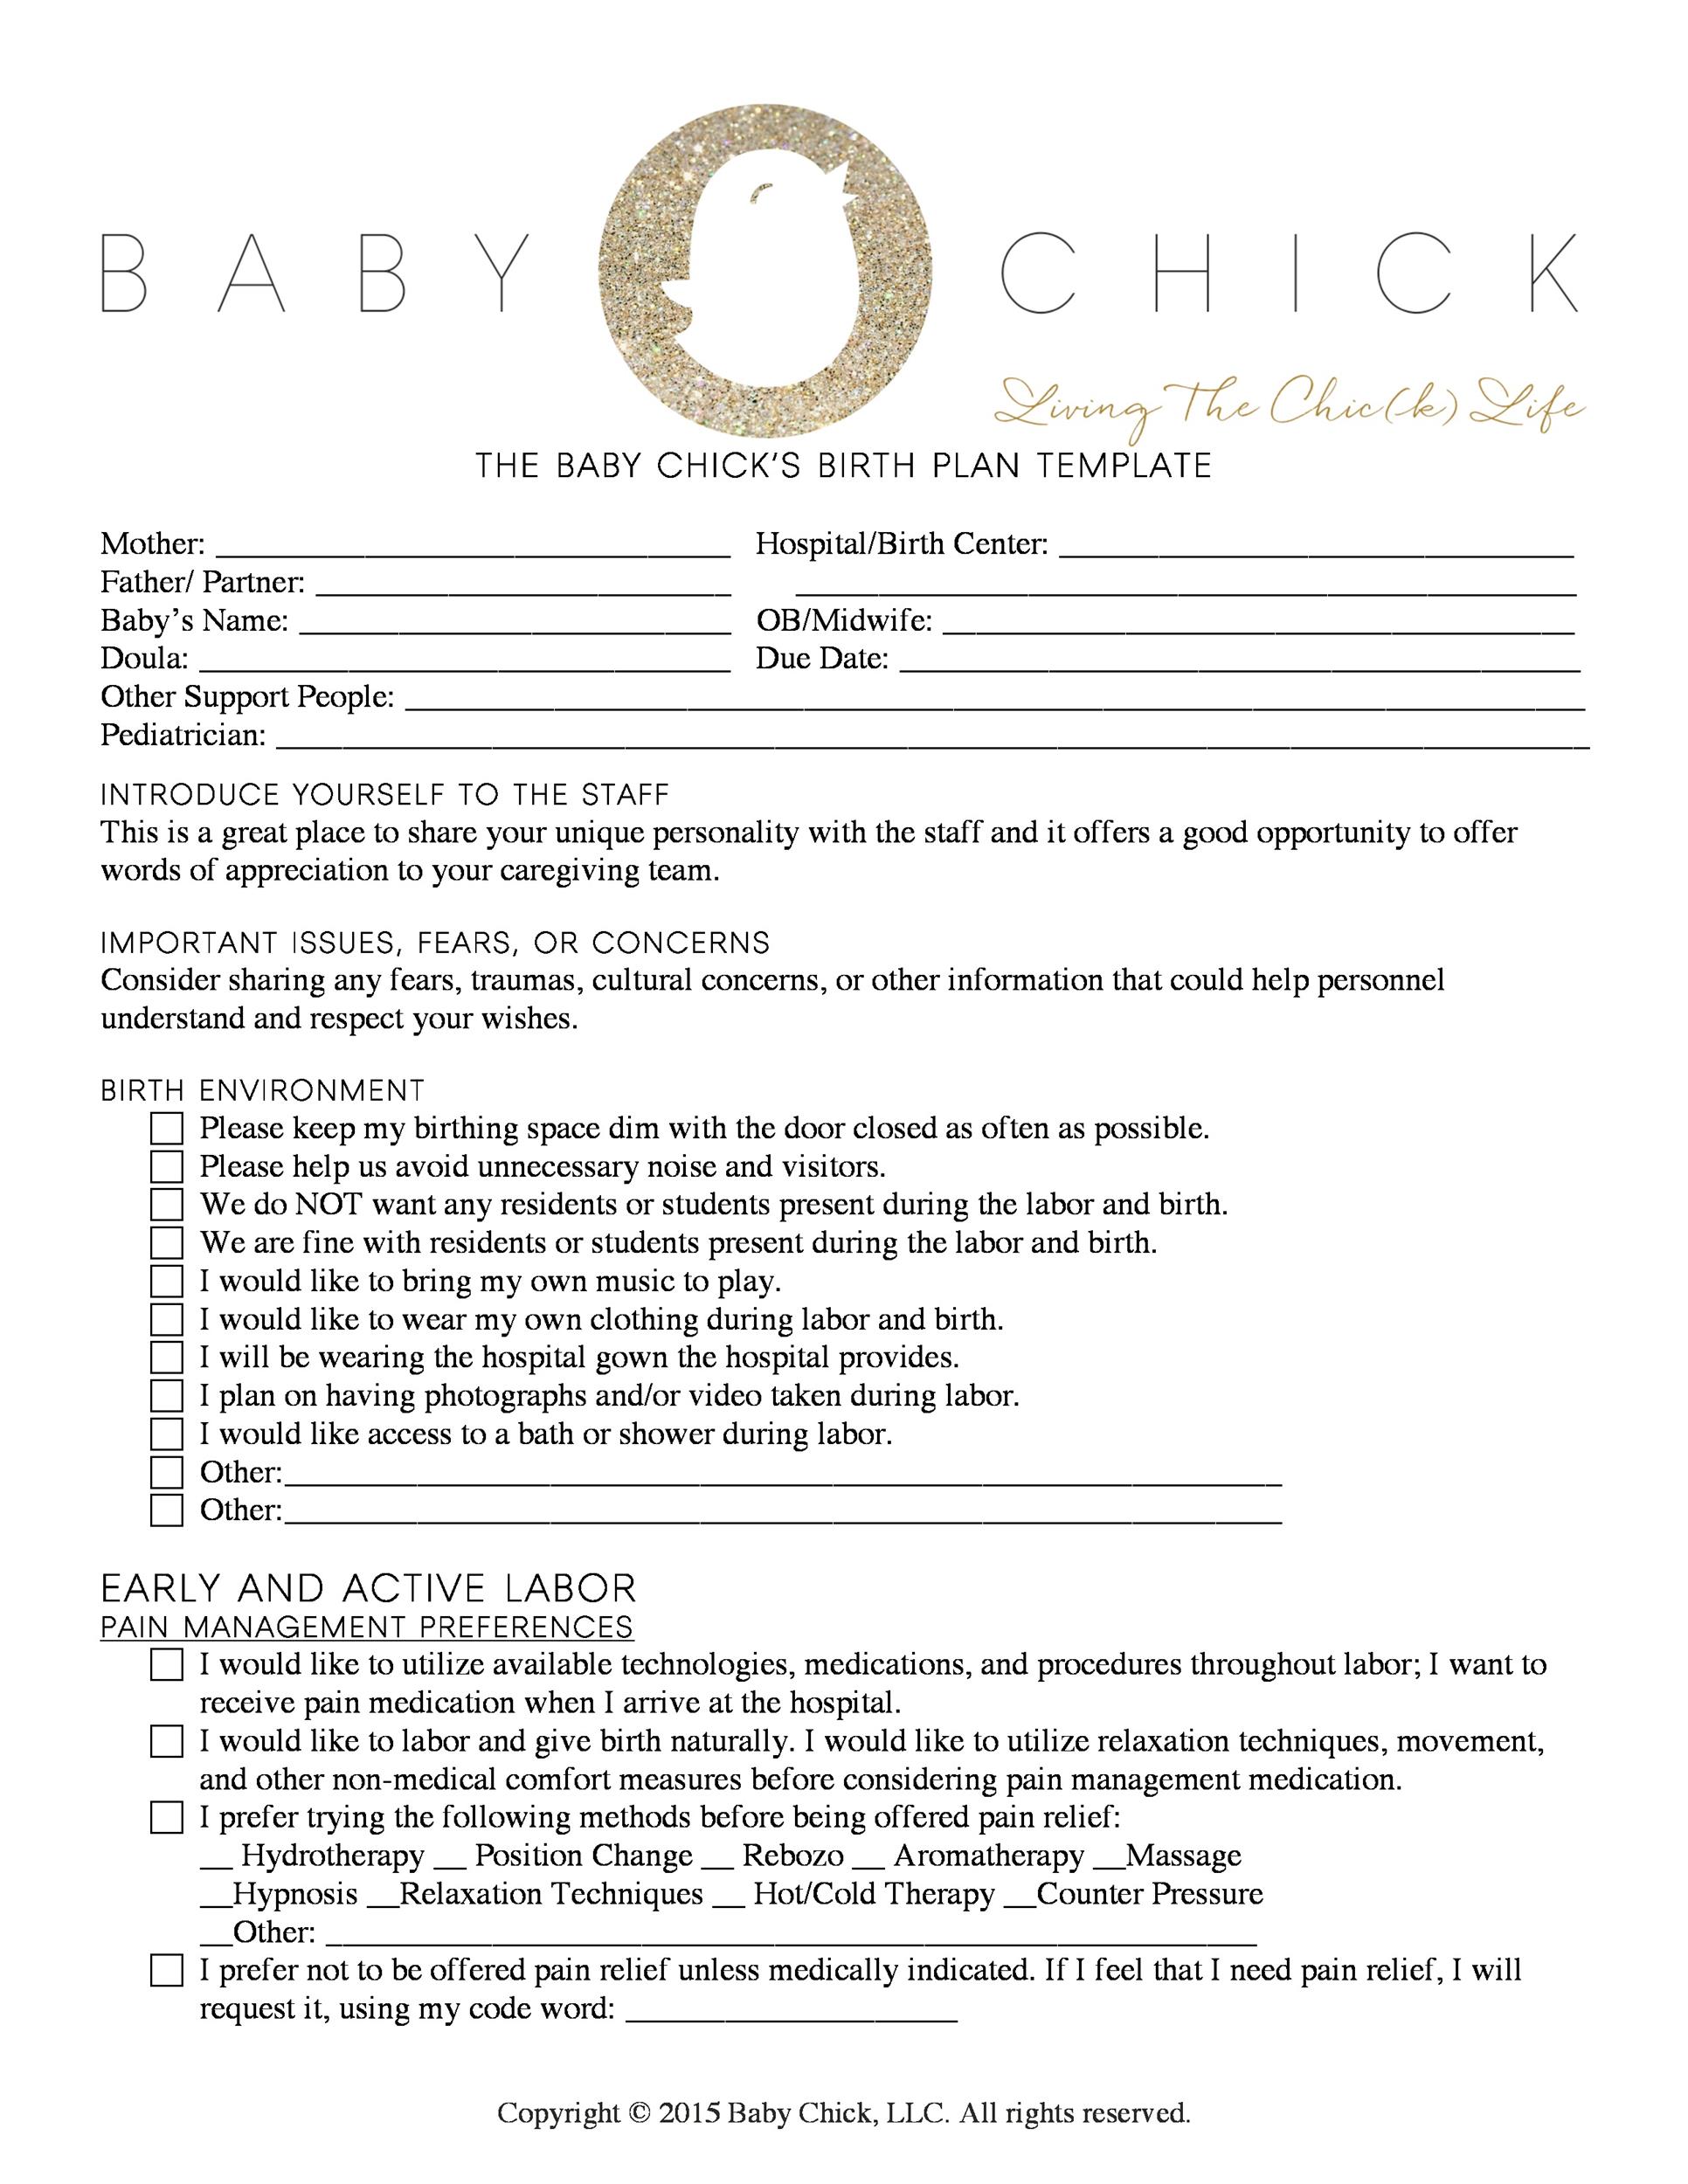 47+ Printable Birth Plan Templates [Birth Plan Checklist] ᐅ TemplateLab